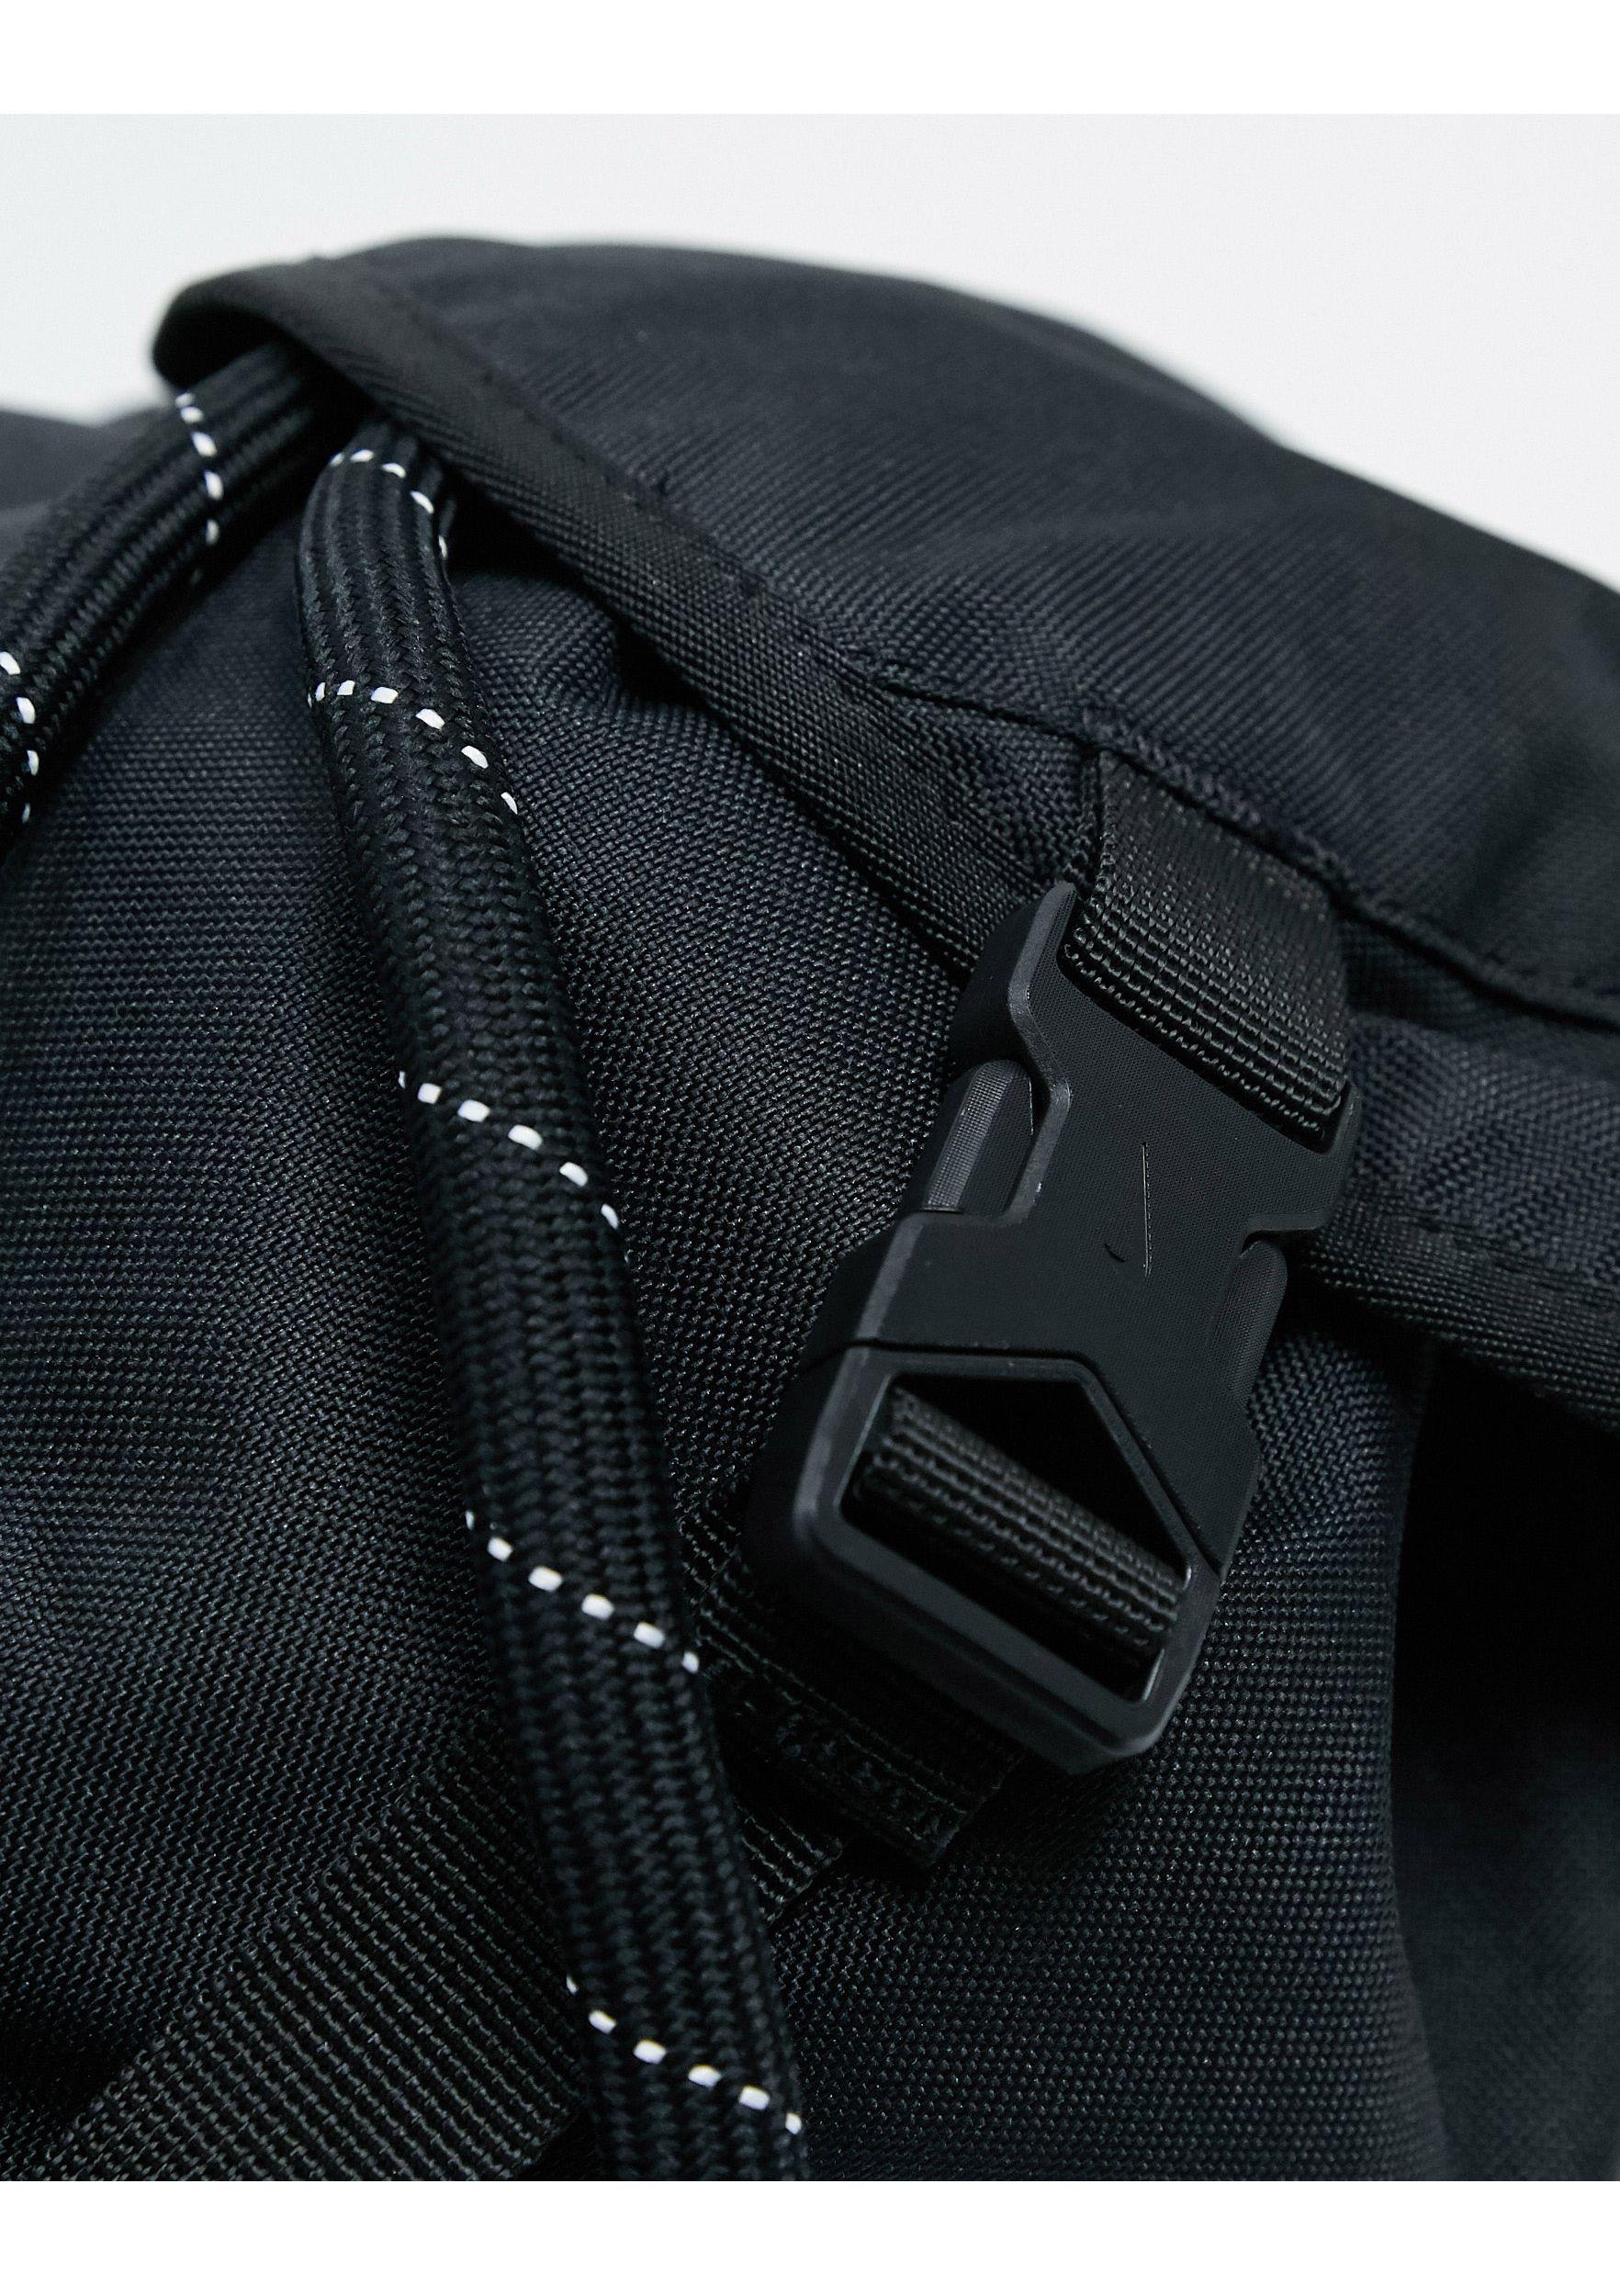 nike utility pocket black backpack